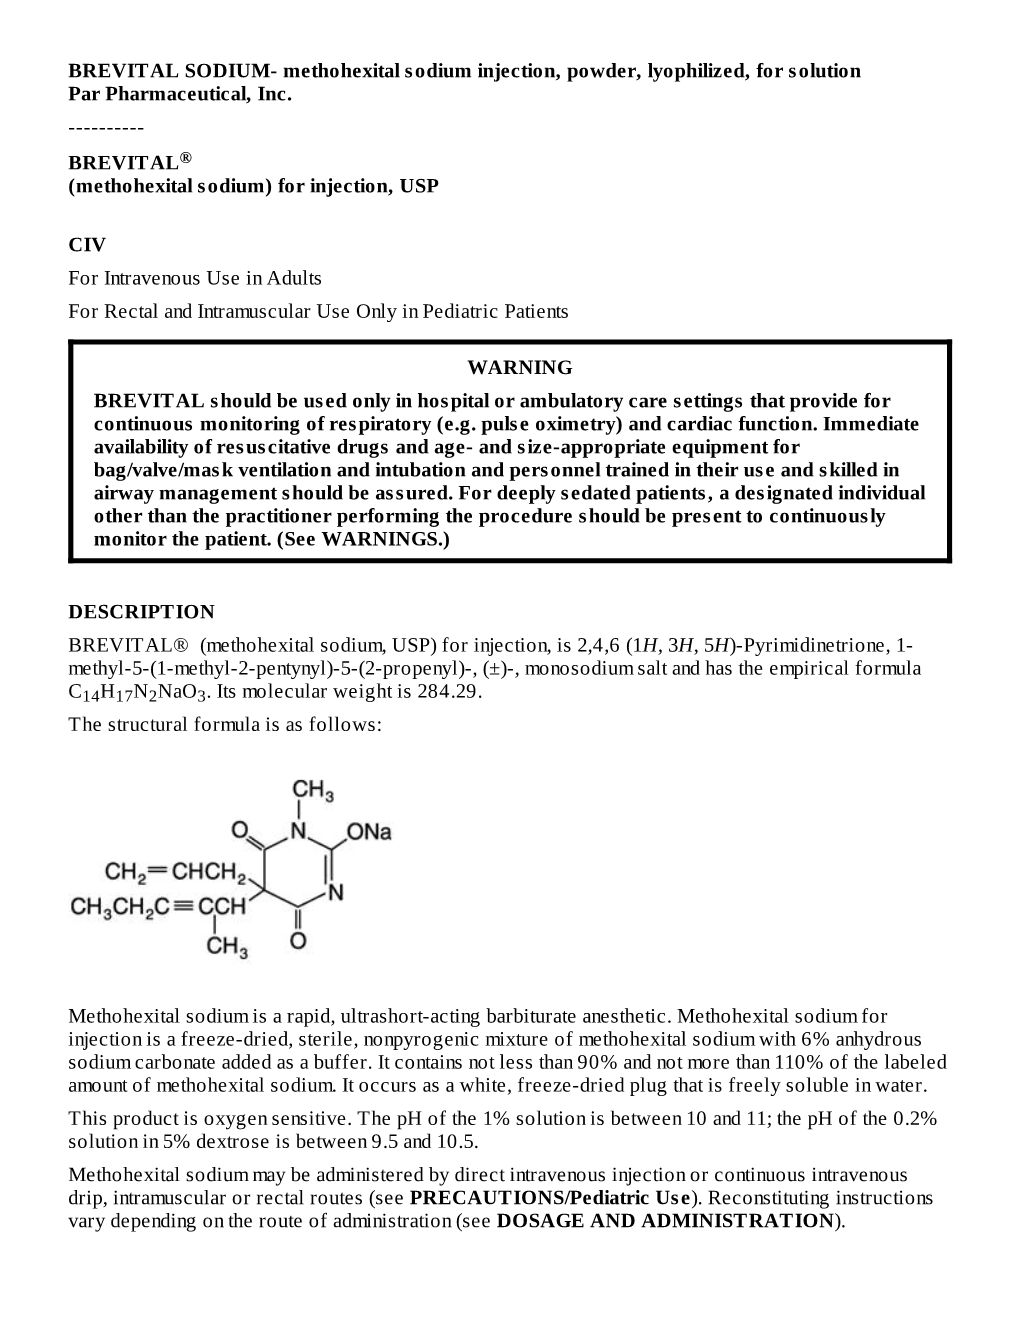 BREVITAL® (Methohexital Sodium) for Injection, USP